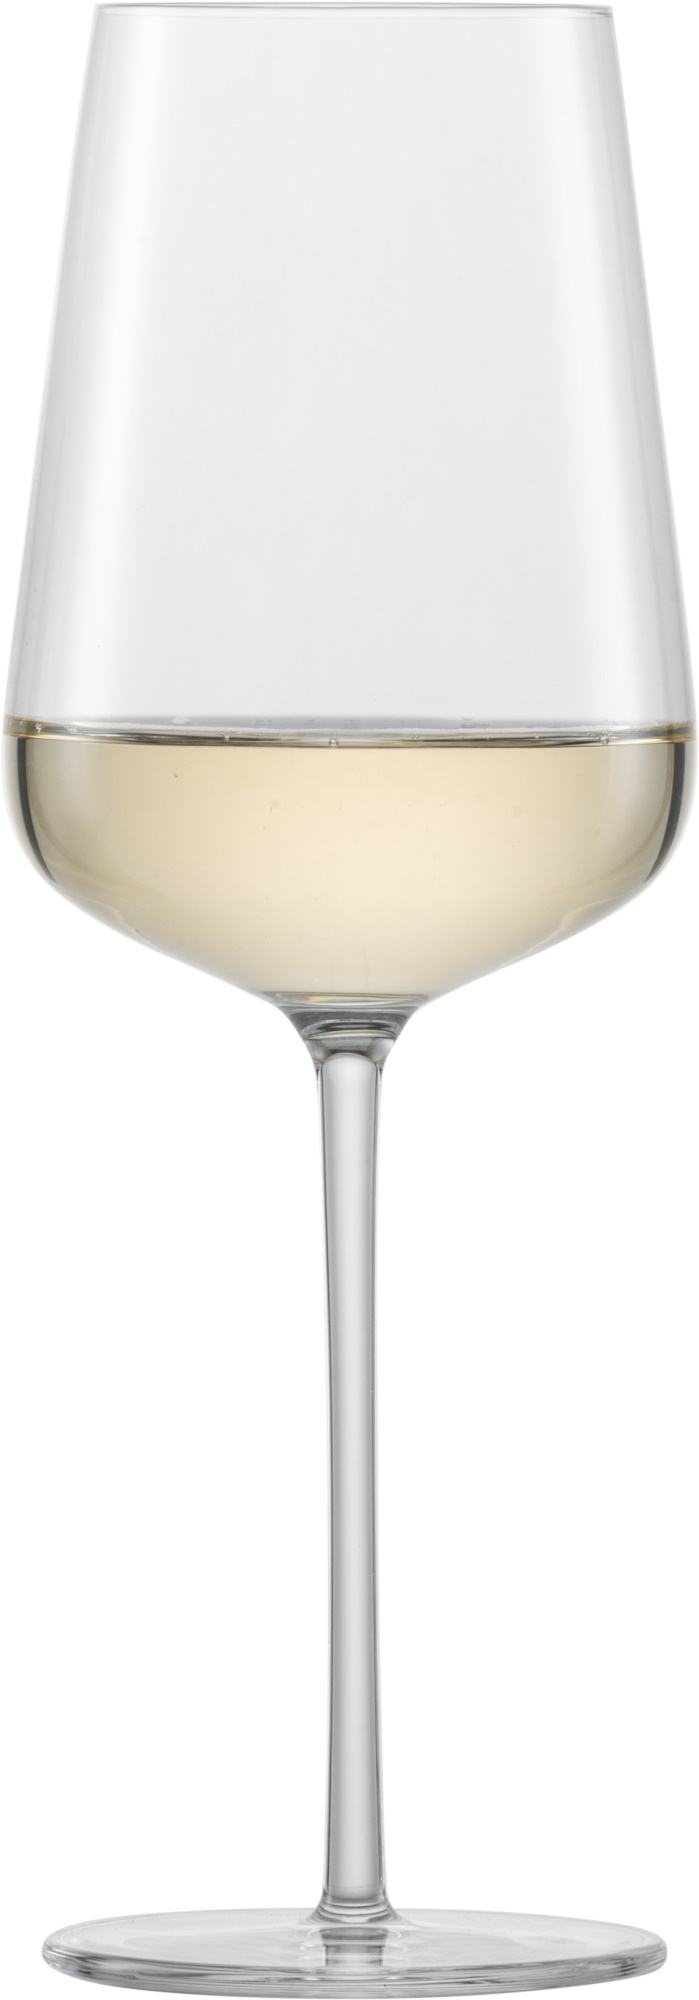 Pahar vin alb Schott Zwiesel Vervino Riesling 406ml Schott Zwiesel